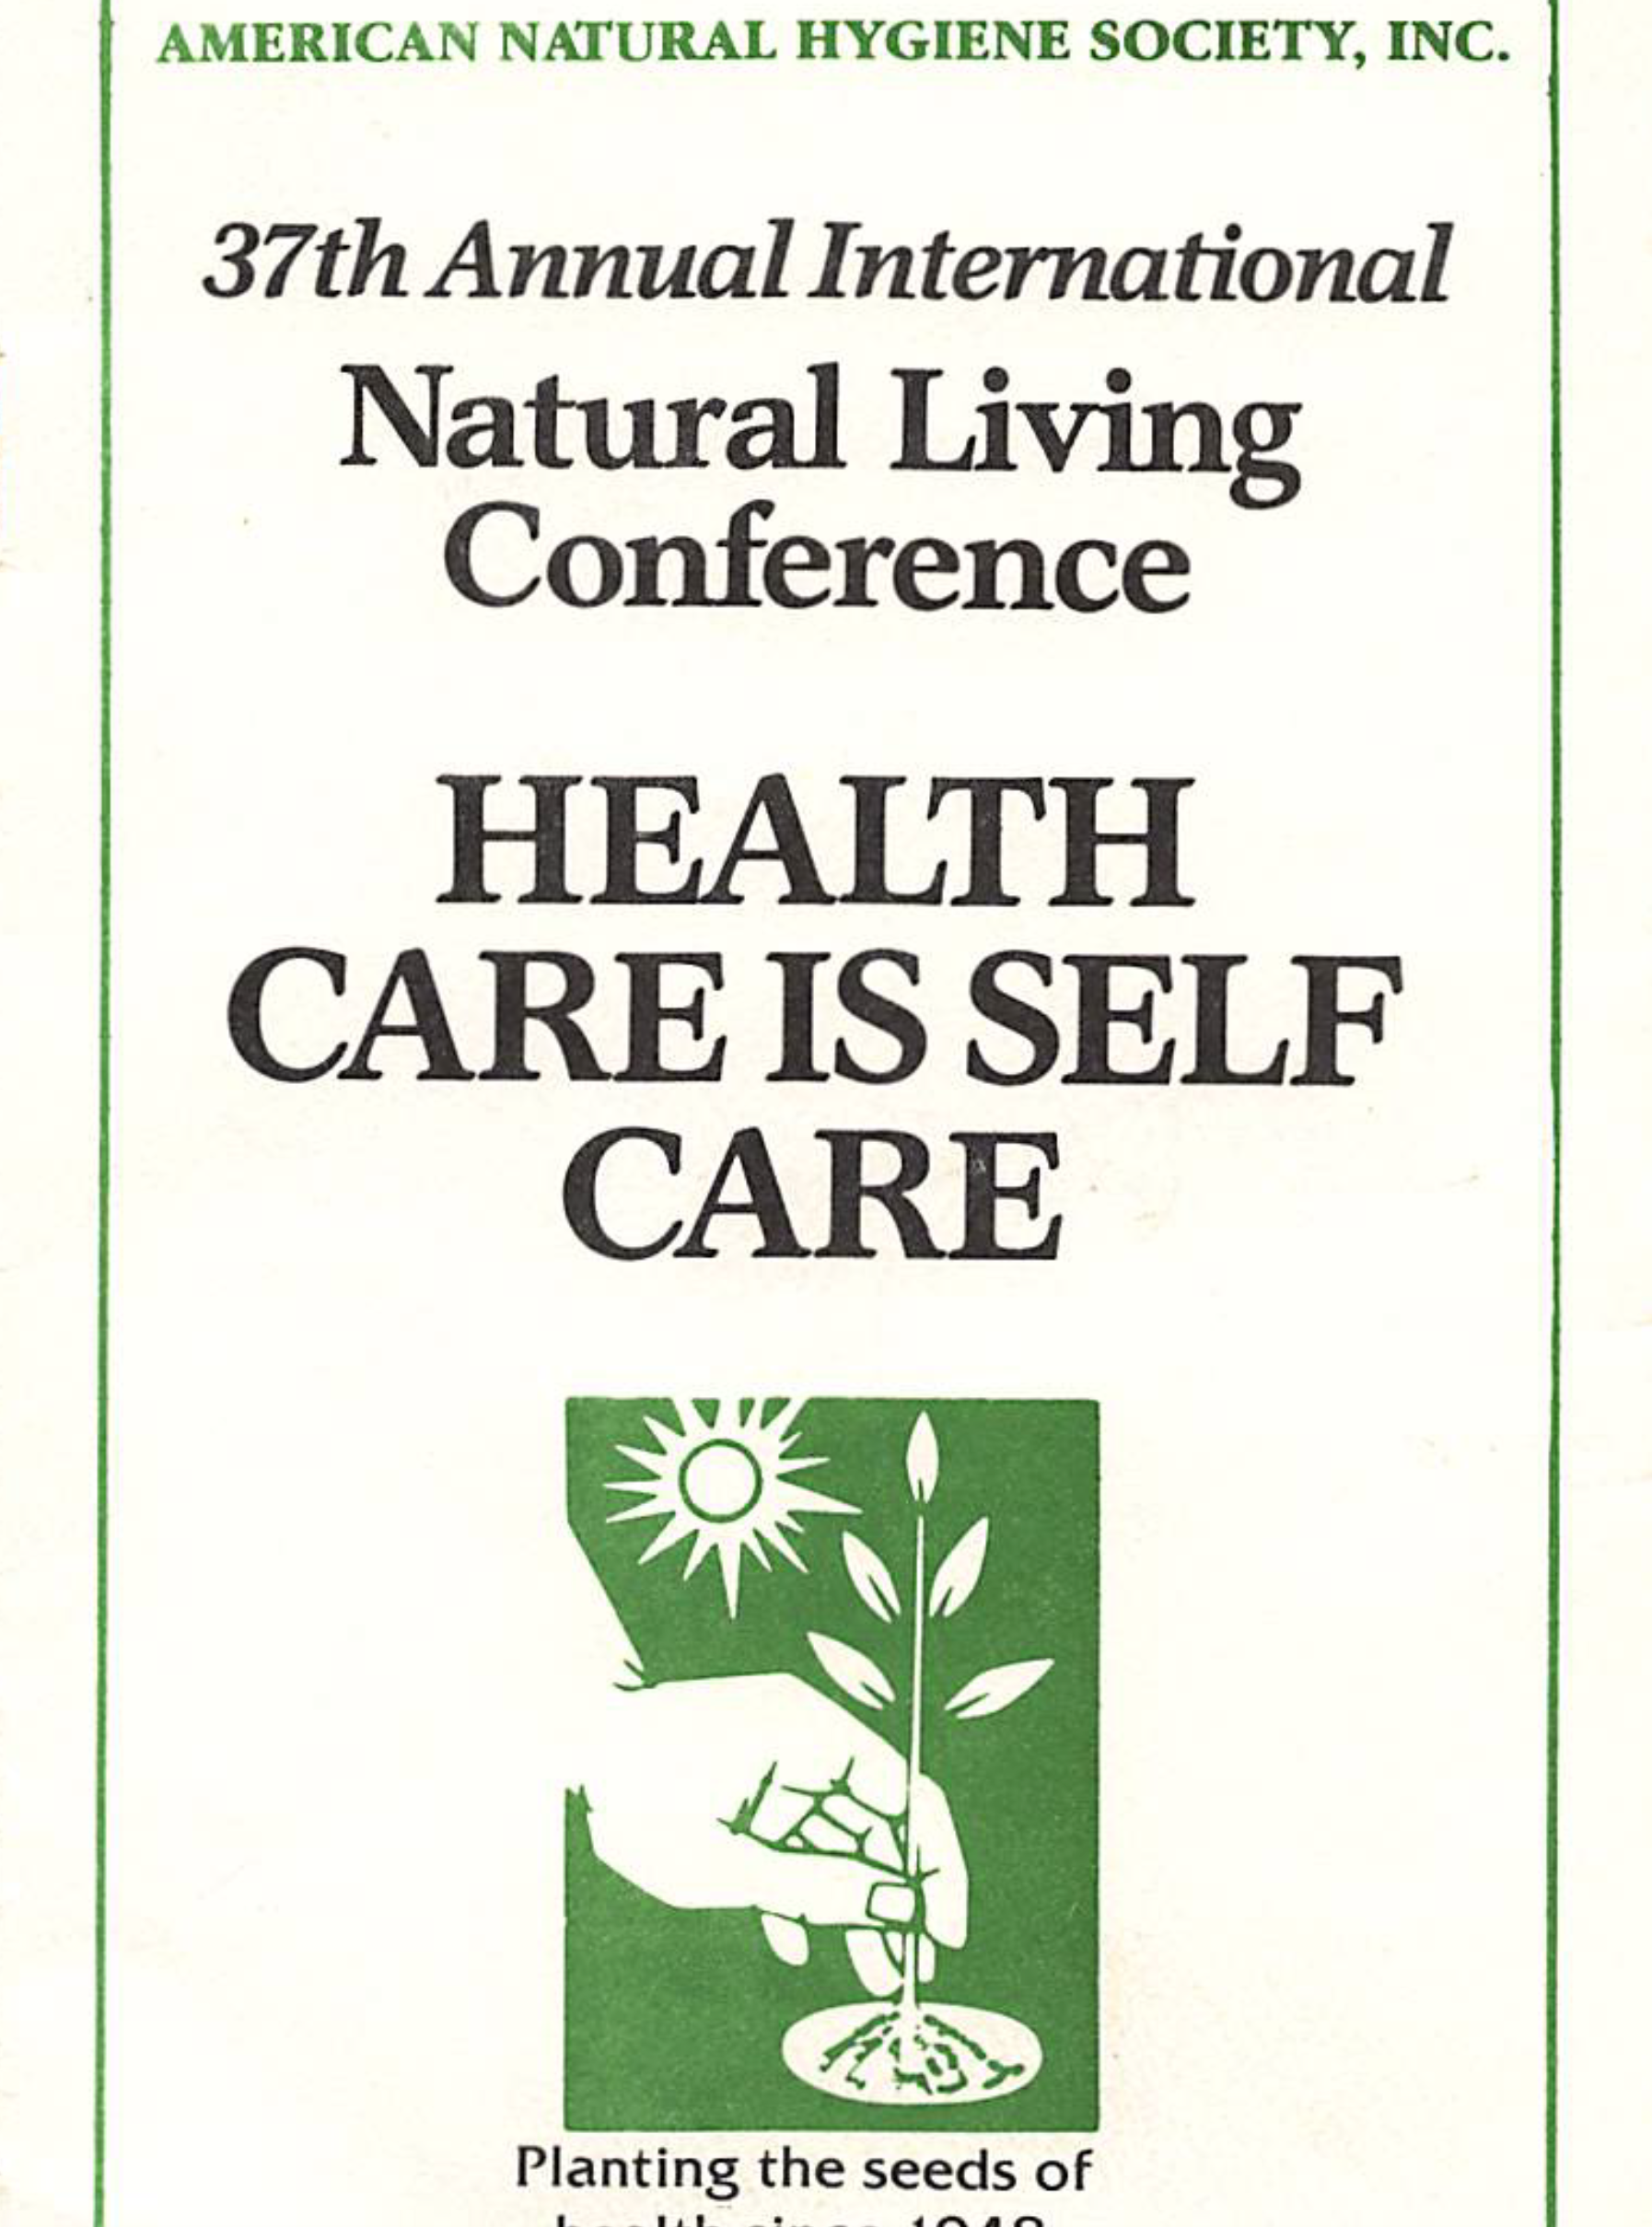 Conference Program. Santa Barbara, 1985